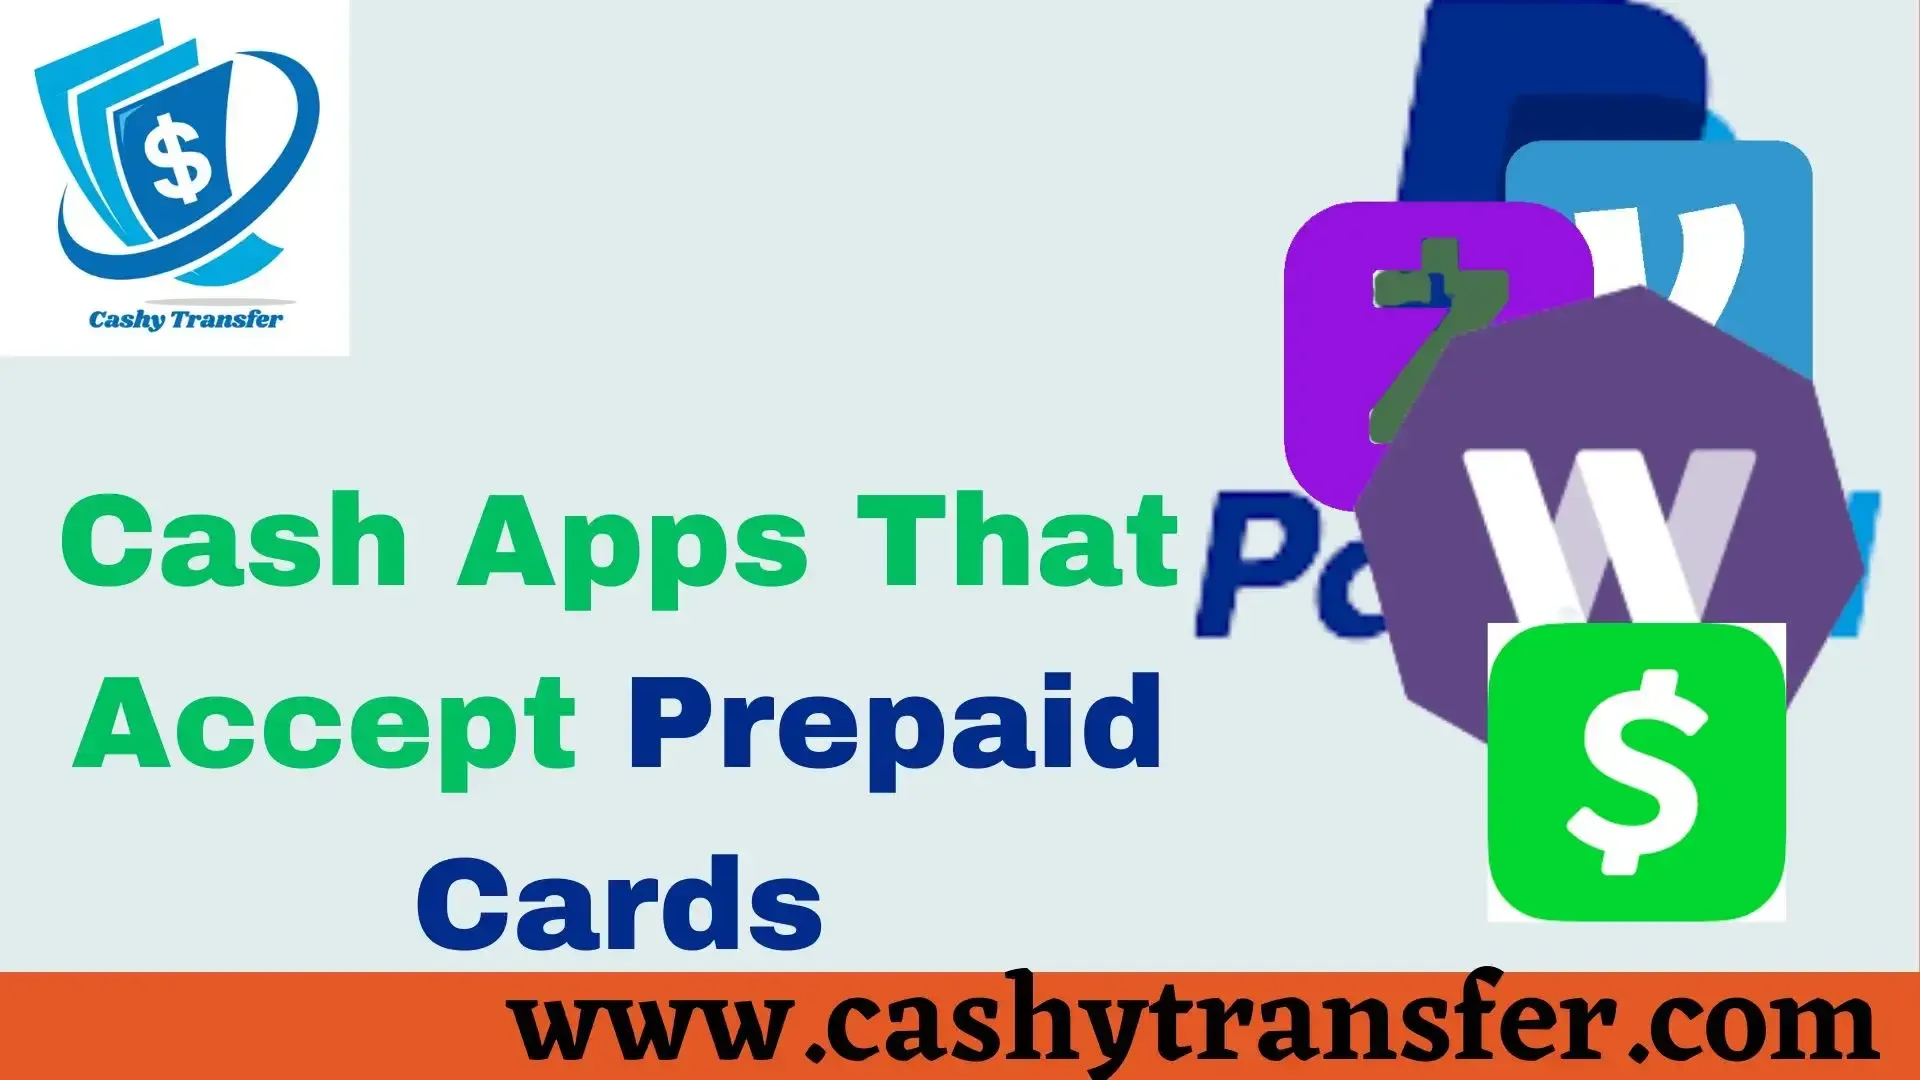 Cash Apps That Accept Prepaid Cards